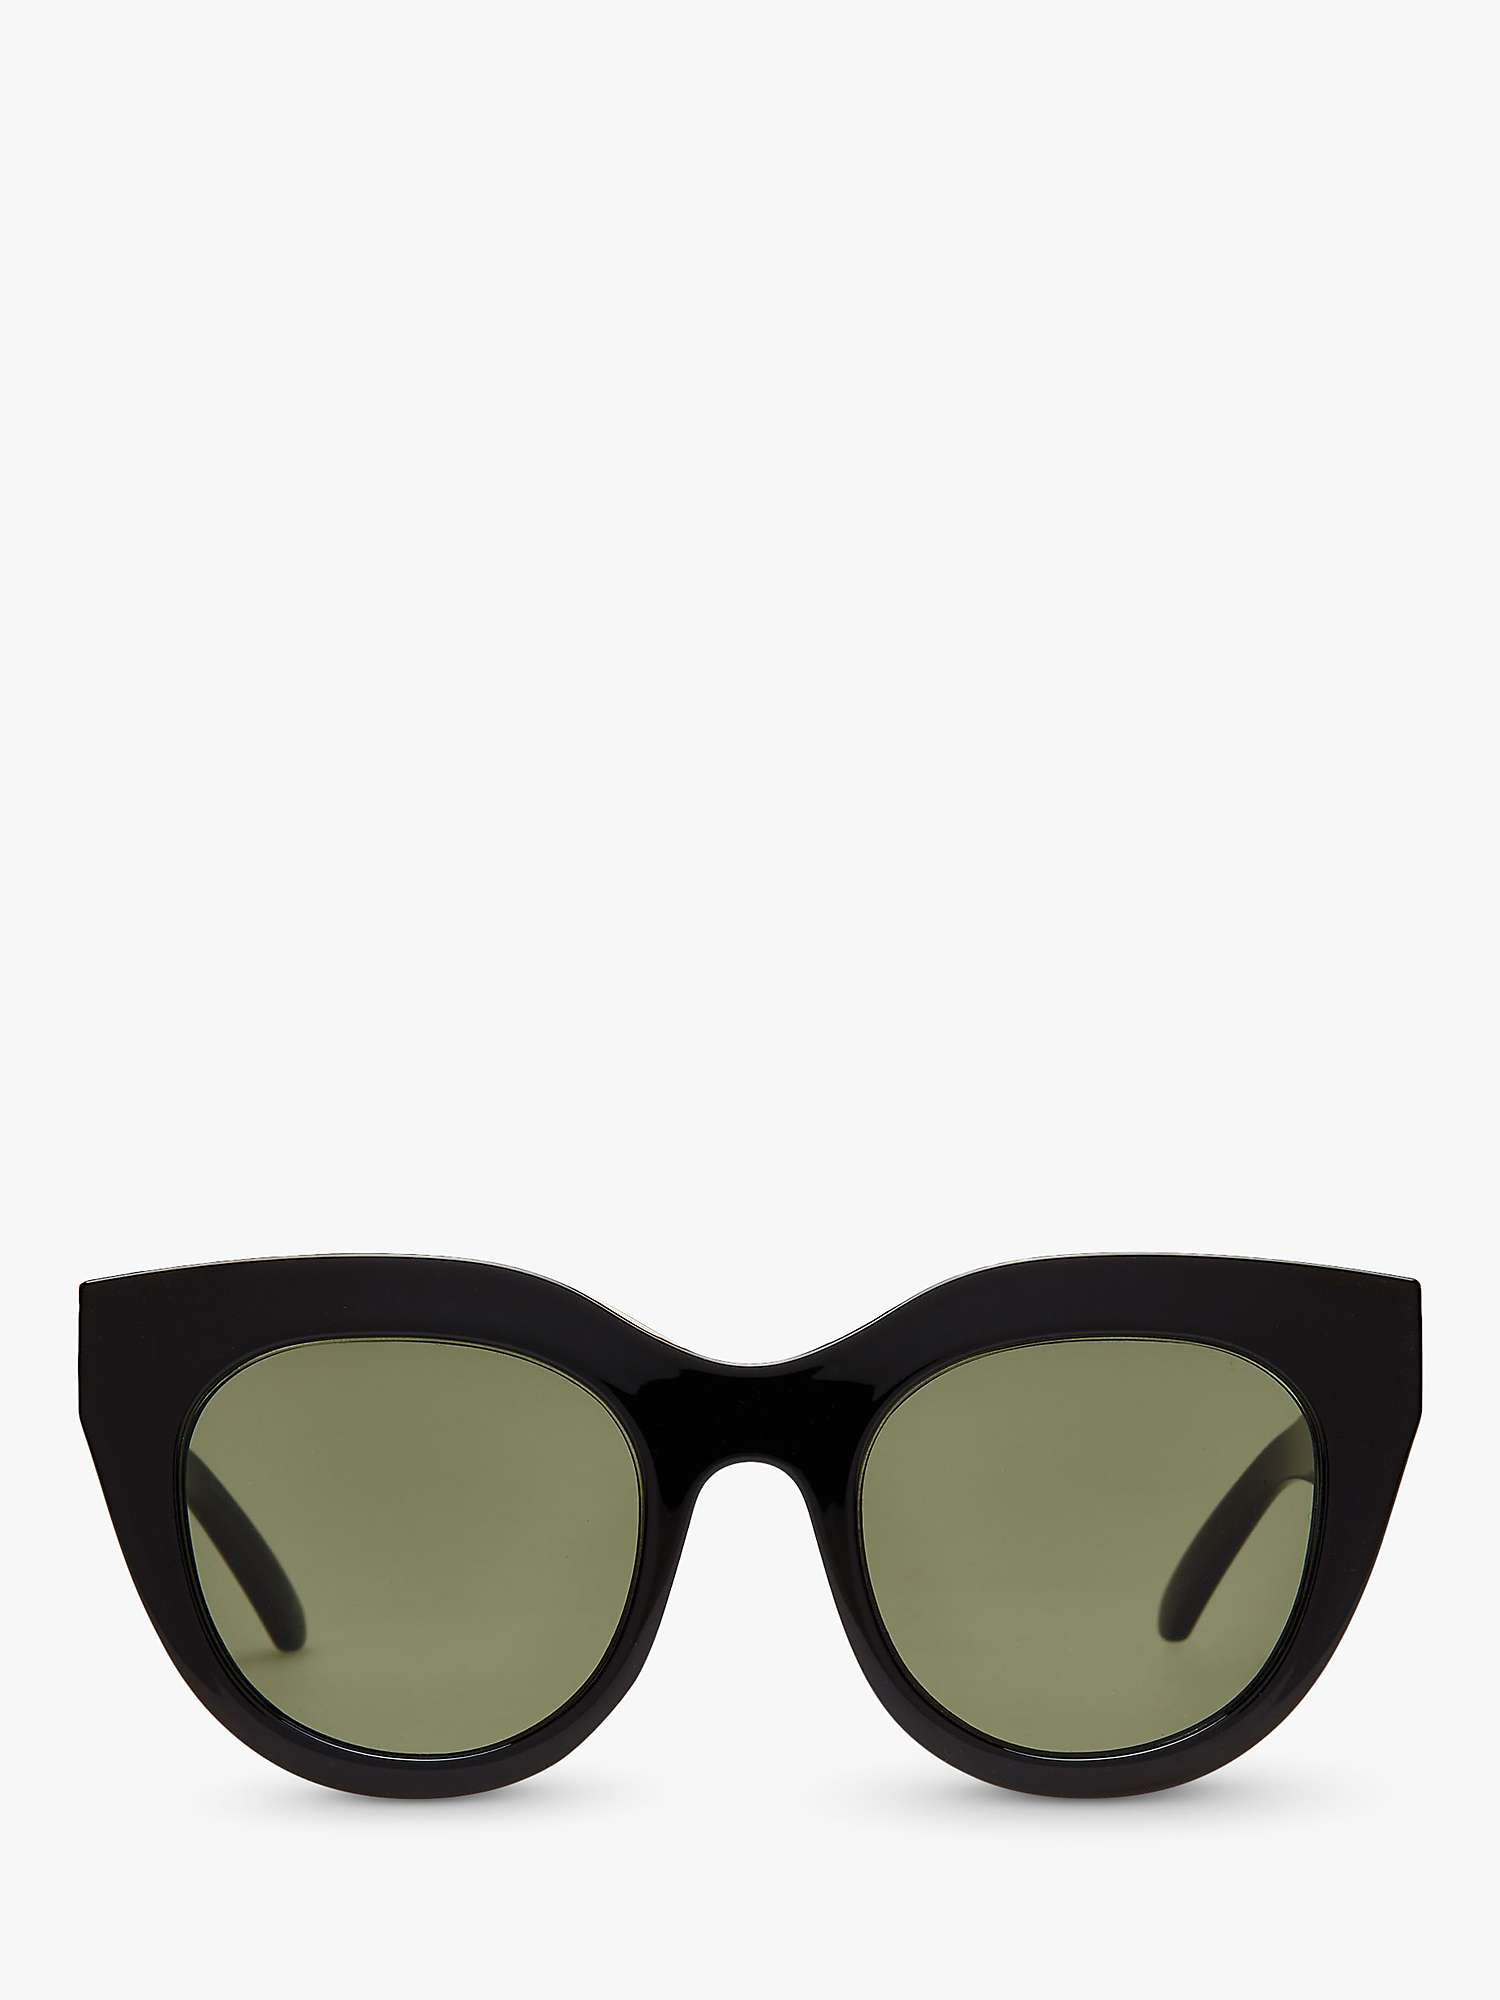 Buy Le Specs Women's Air Heart Cat's Eye Sunglasses Online at johnlewis.com